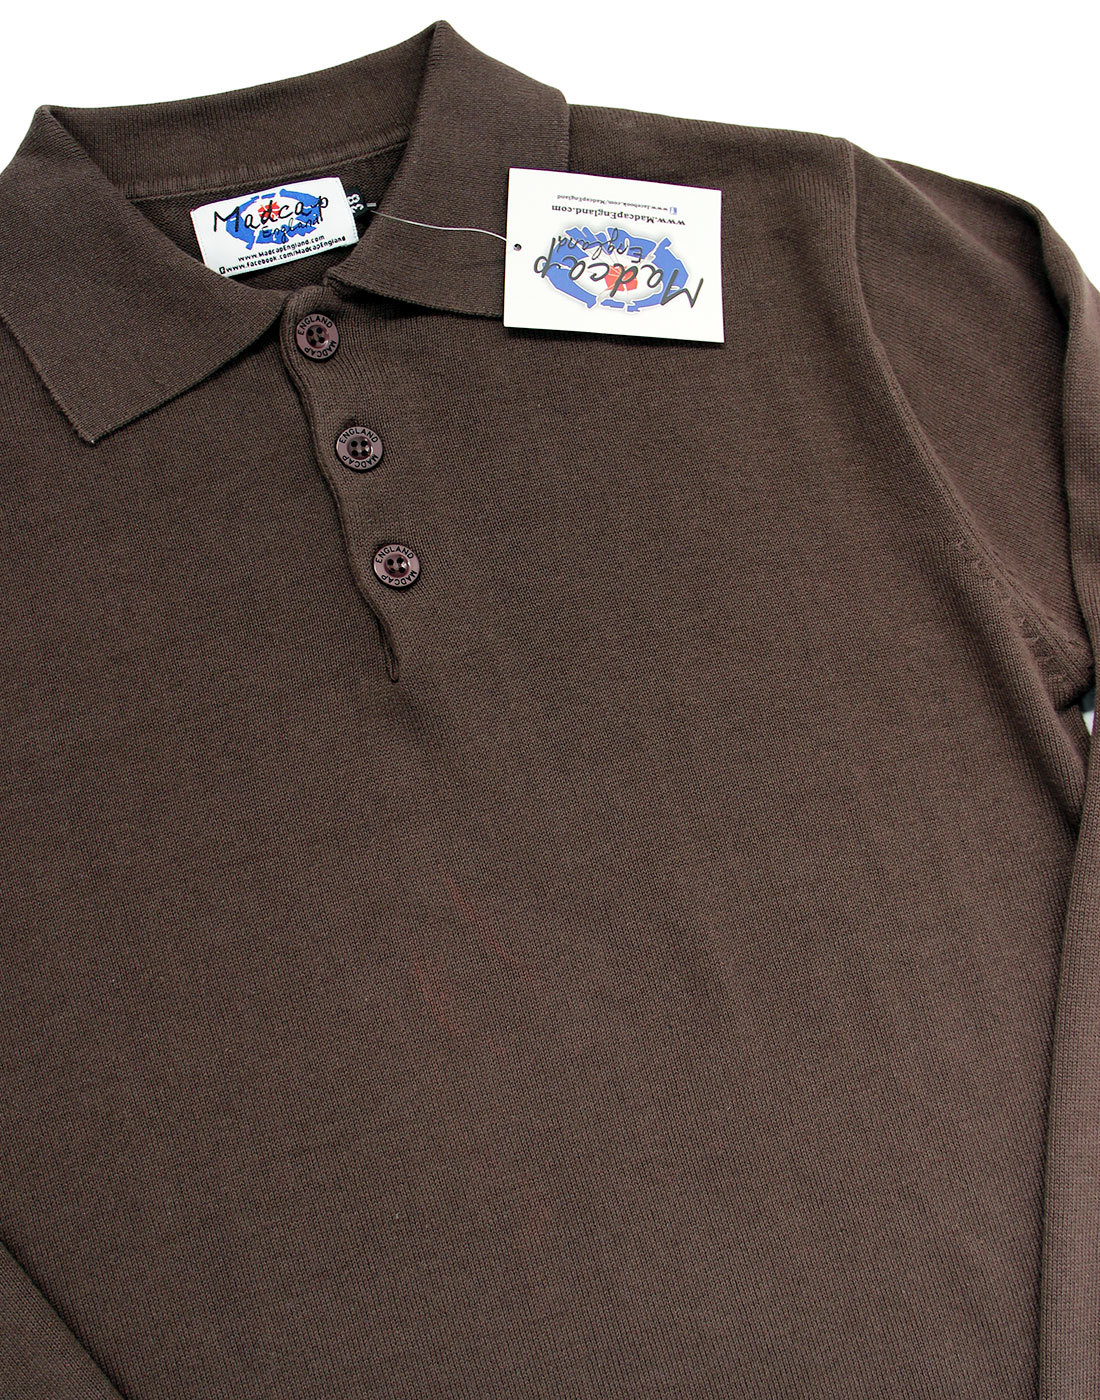 MADCAP ENGLAND Brando Retro 1960s Mod Knitted Polo Shirt in Brown